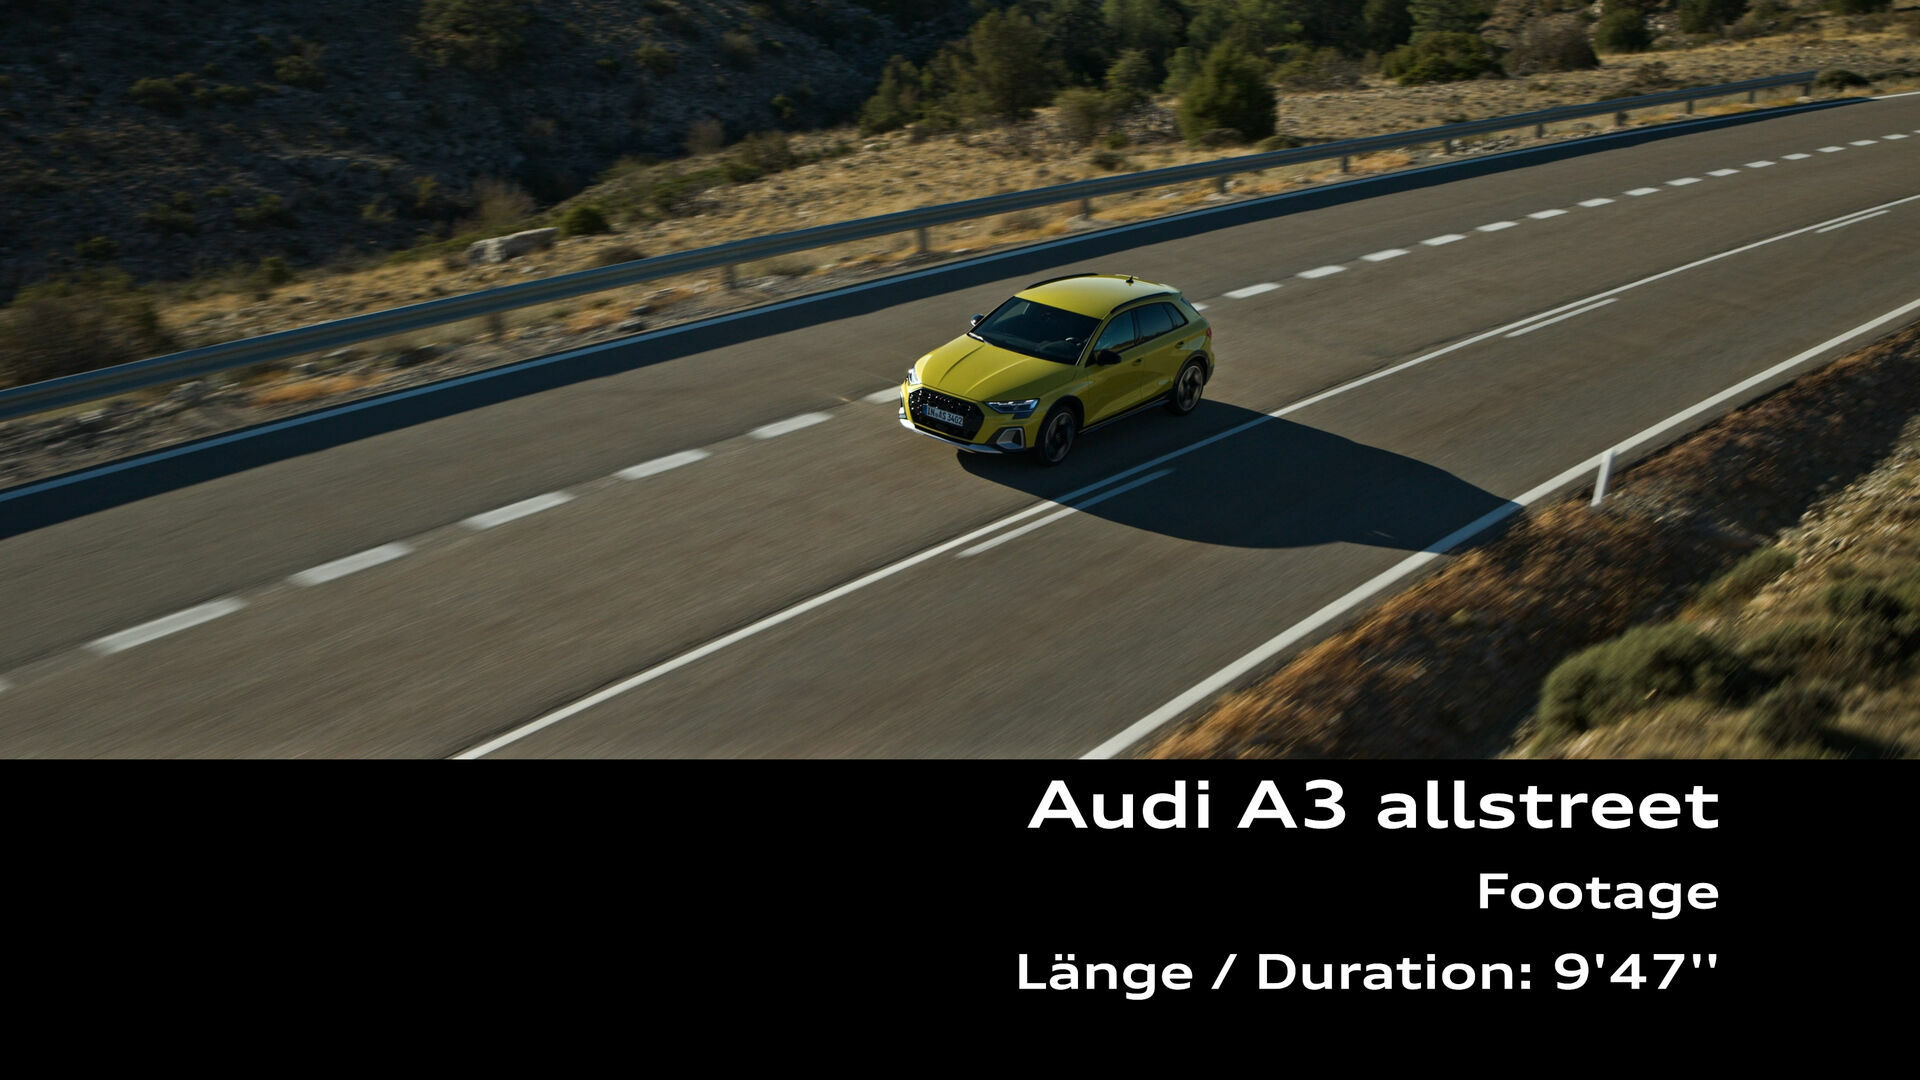 Audi A3 allstreet – Footage (dynamisch)